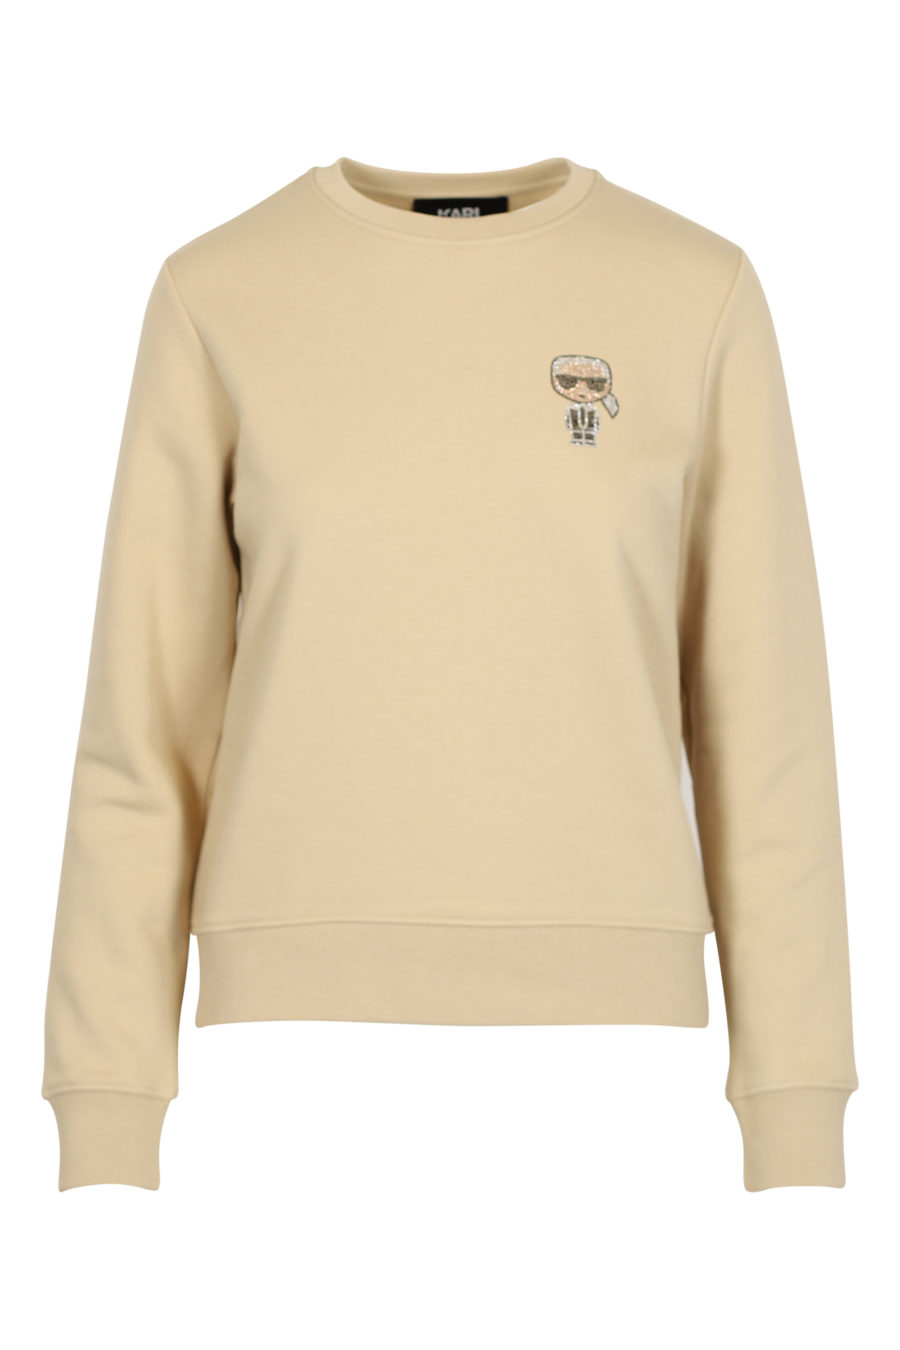 Kamelfarbenes Sweatshirt mit Mini-Strasssteinmuster - IMG 3008